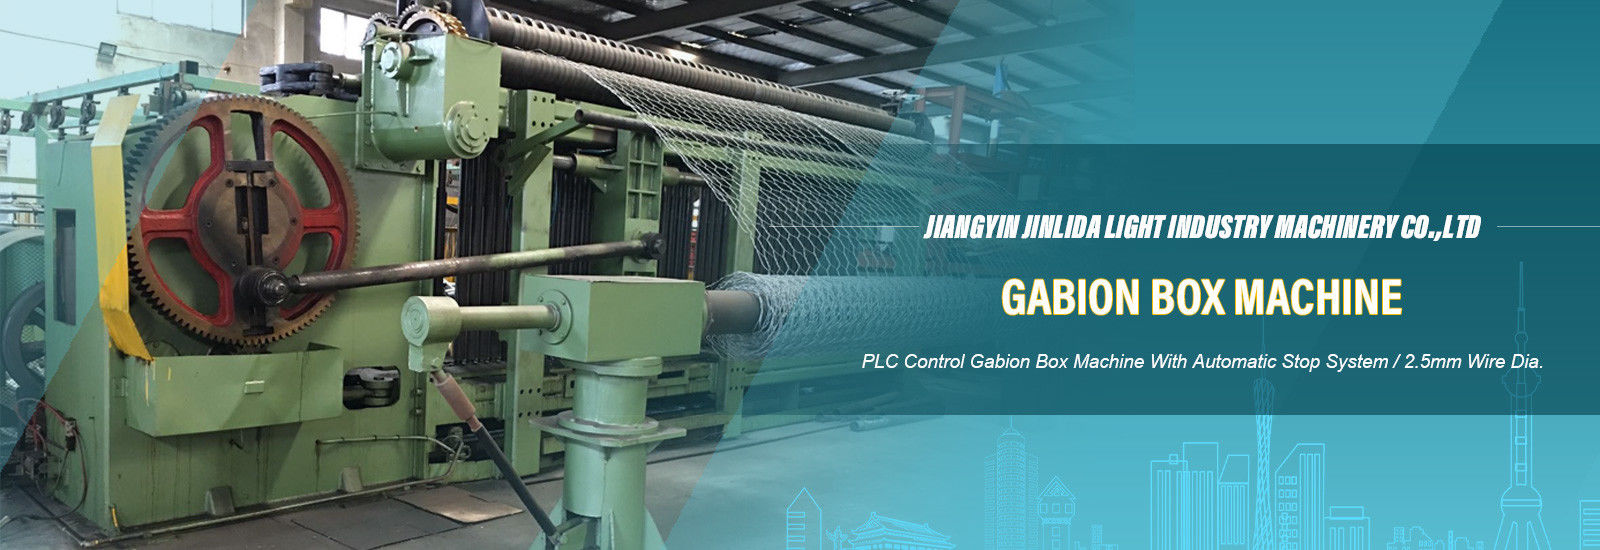 quality Gabion Machine factory